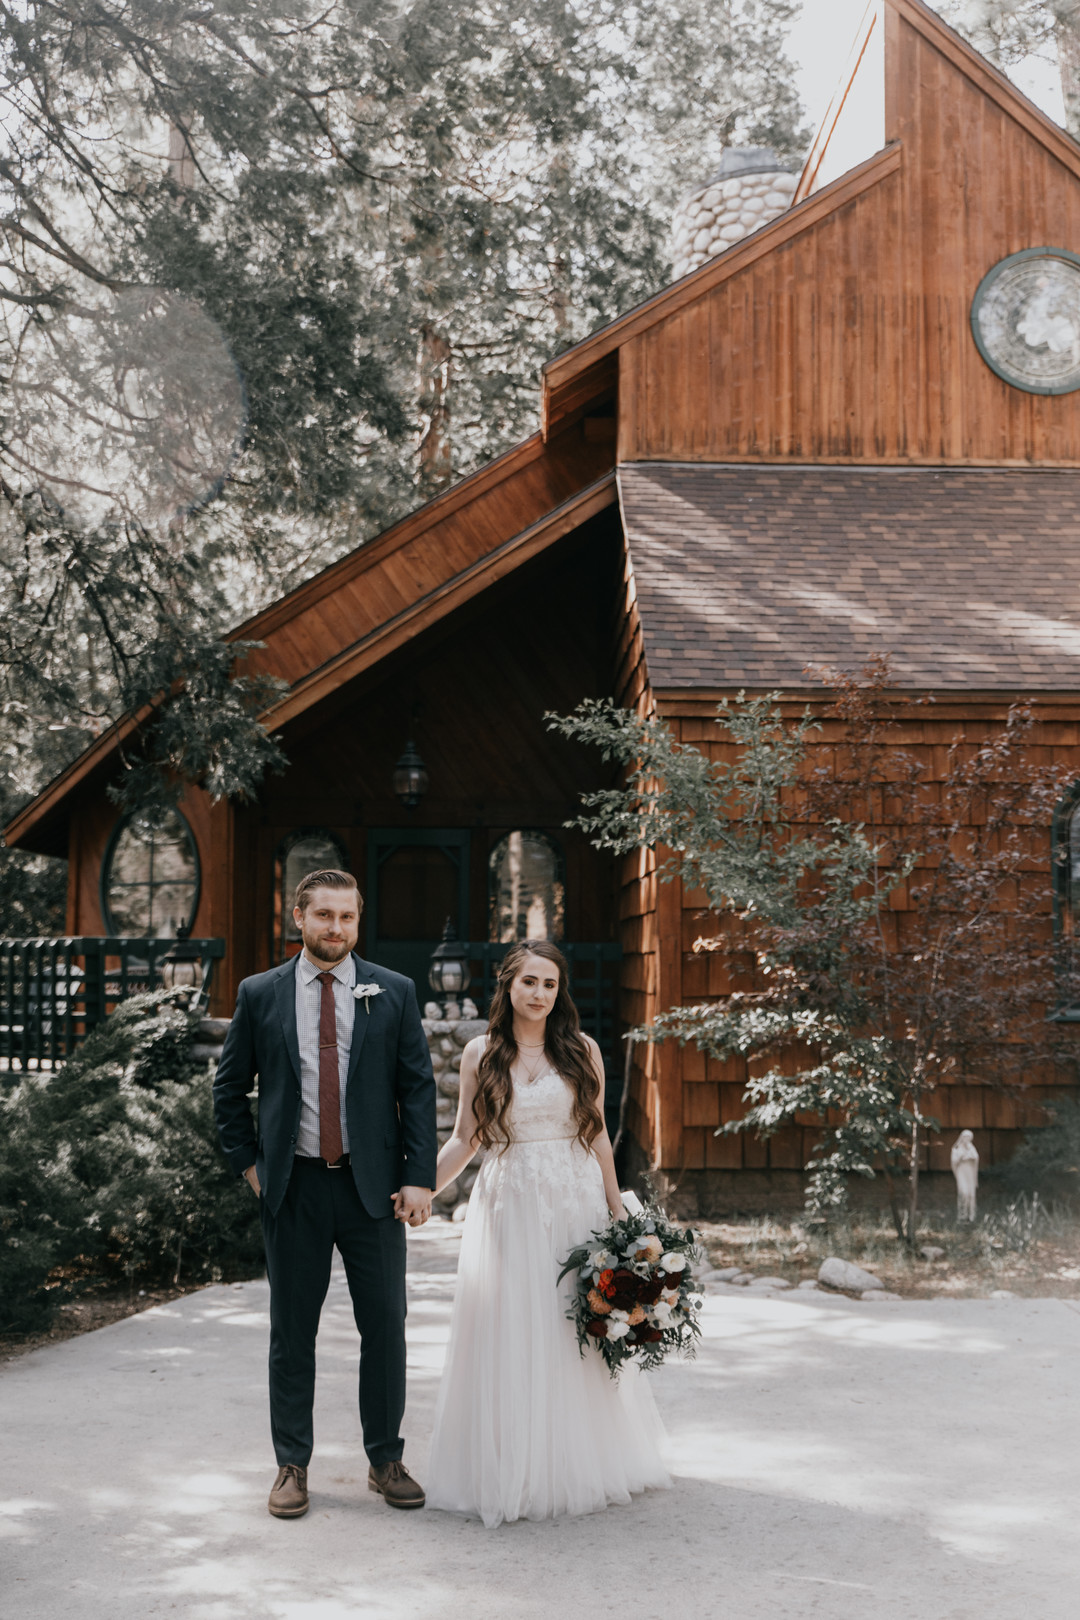 Honeymoon Cabin | Intimate Rustic Forest Wedding